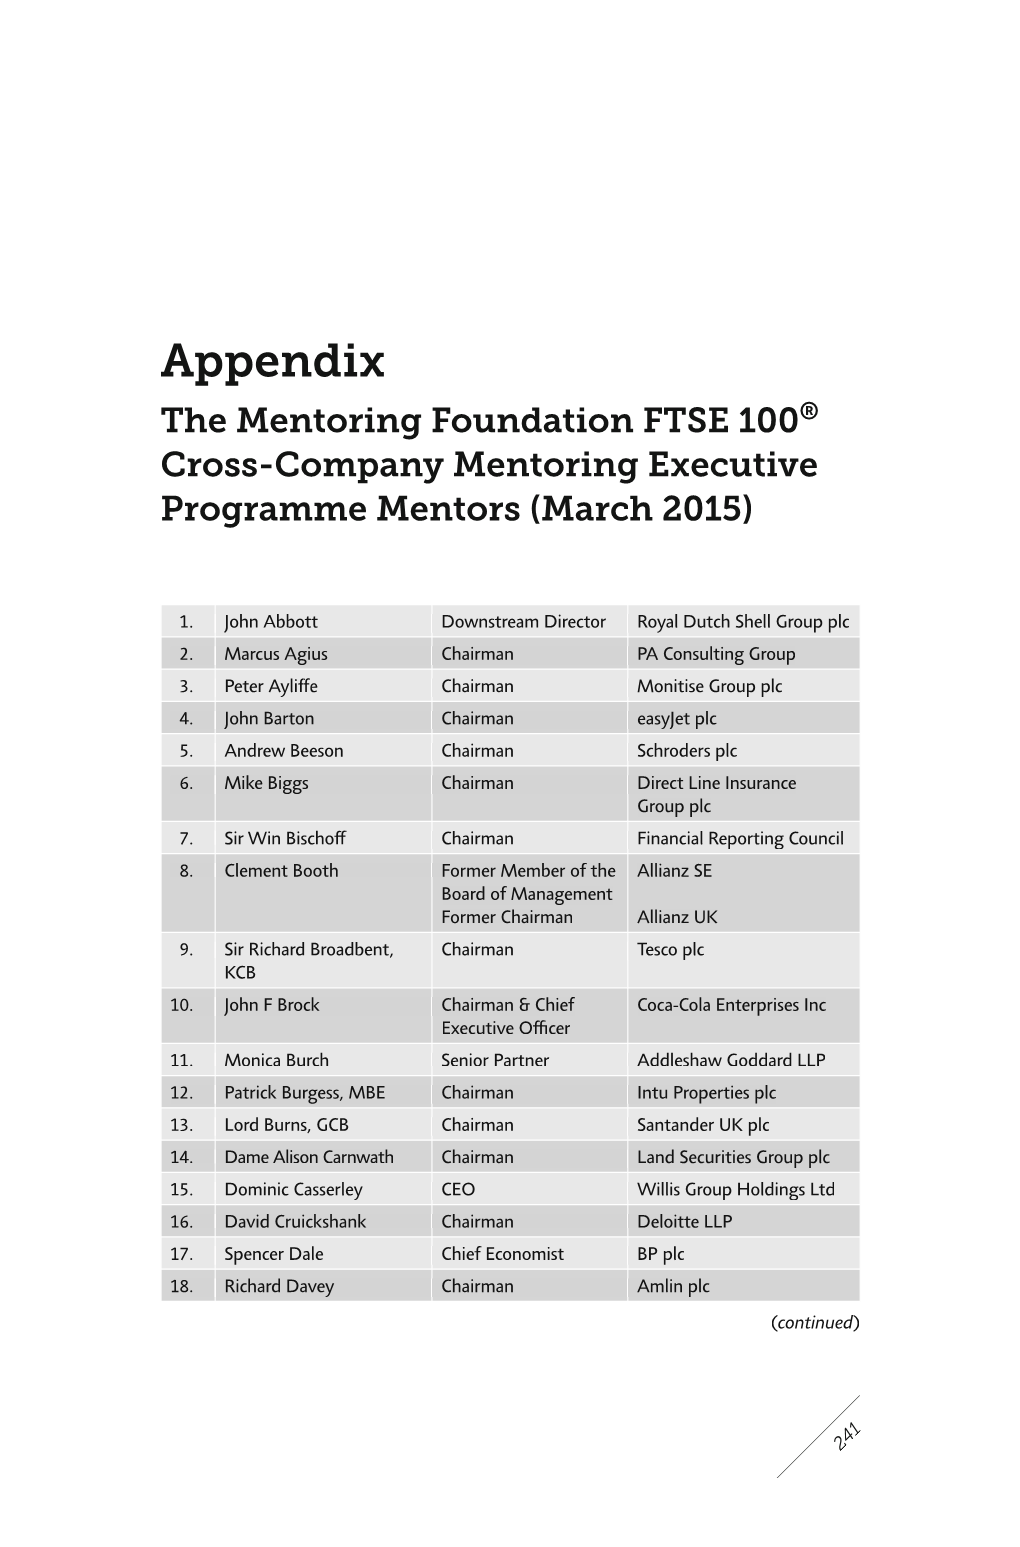 Appendix the Mentoring Foundation FTSE 100® Cross-Company Mentoring Executive Programme Mentors (March 2015)